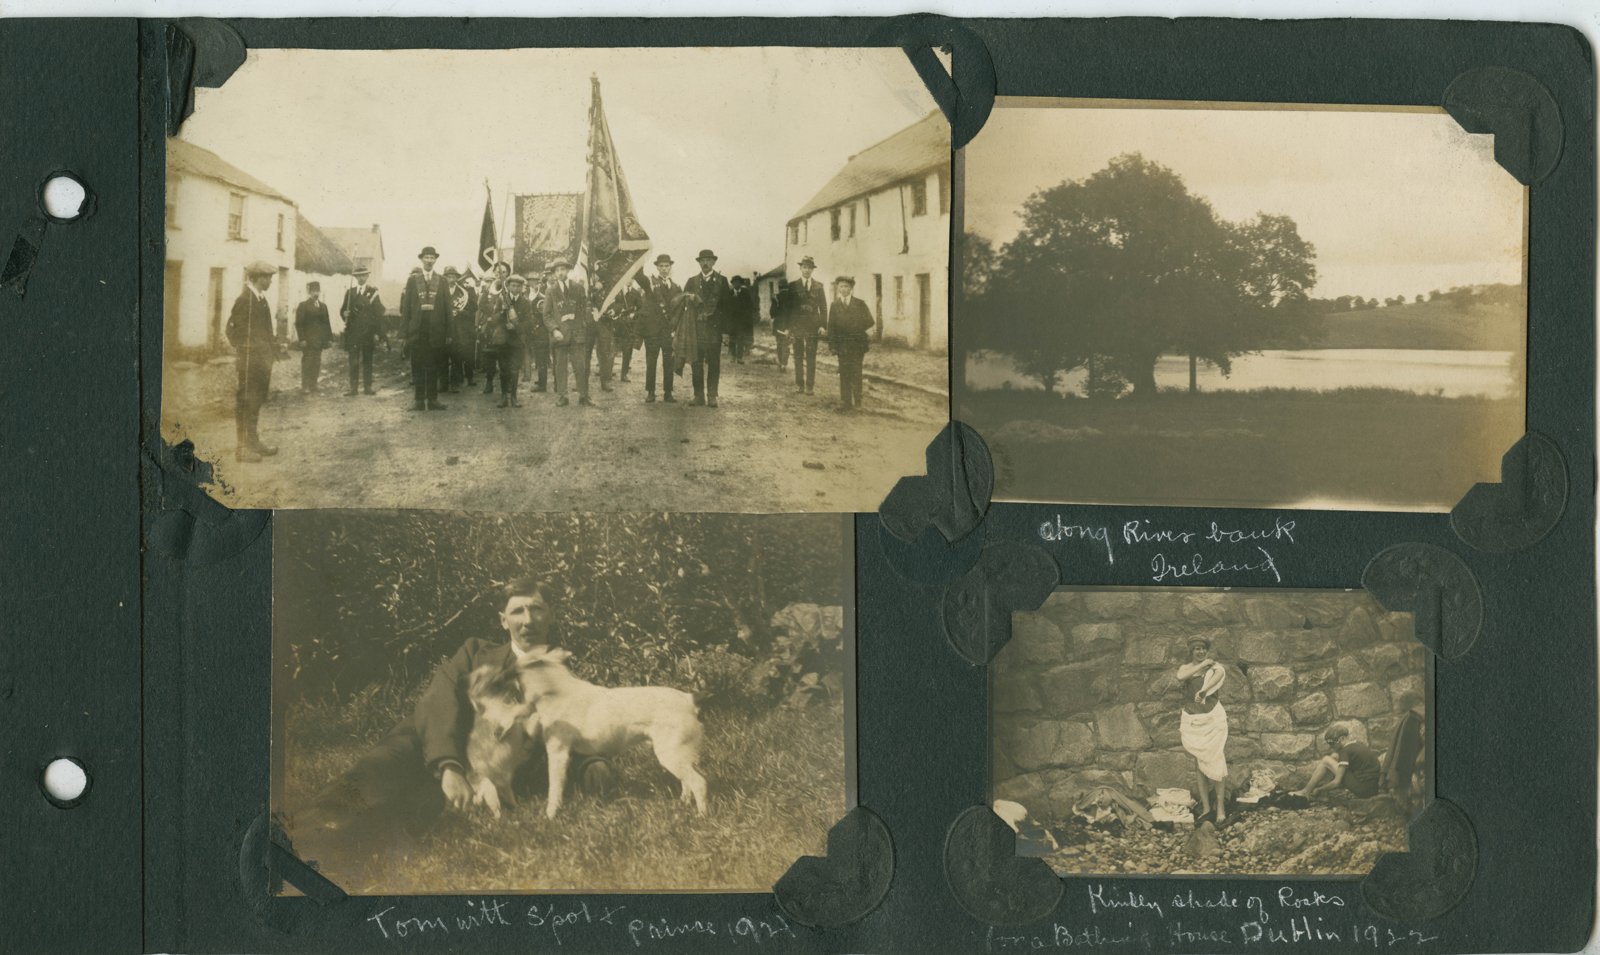 Album page showing various scenes around Ireland, 1920s.